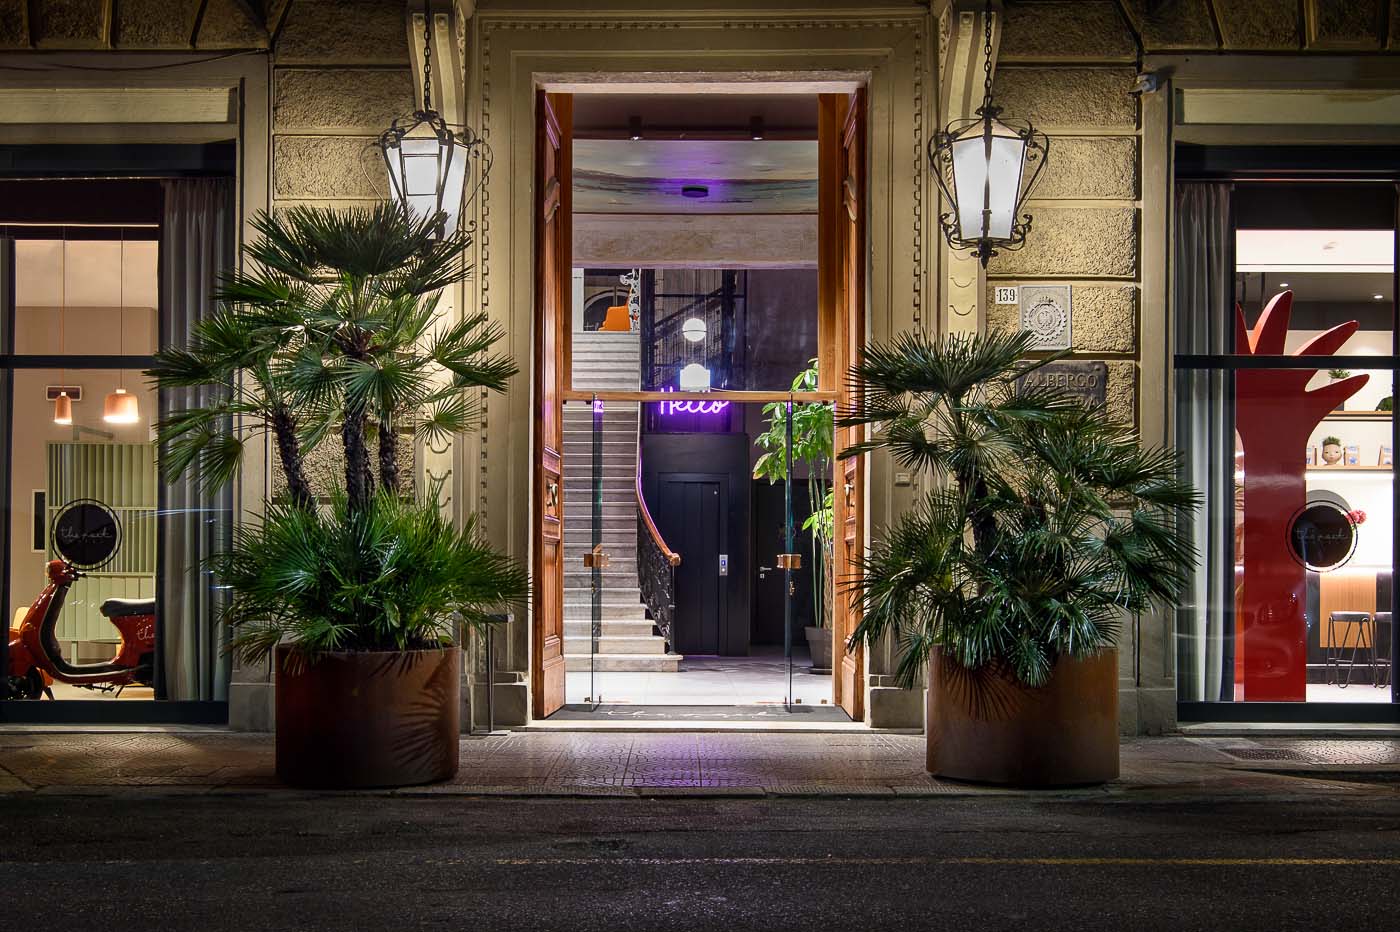 The Poet Hotel La Spezia, Liguria Italy Boutique Design Hotel